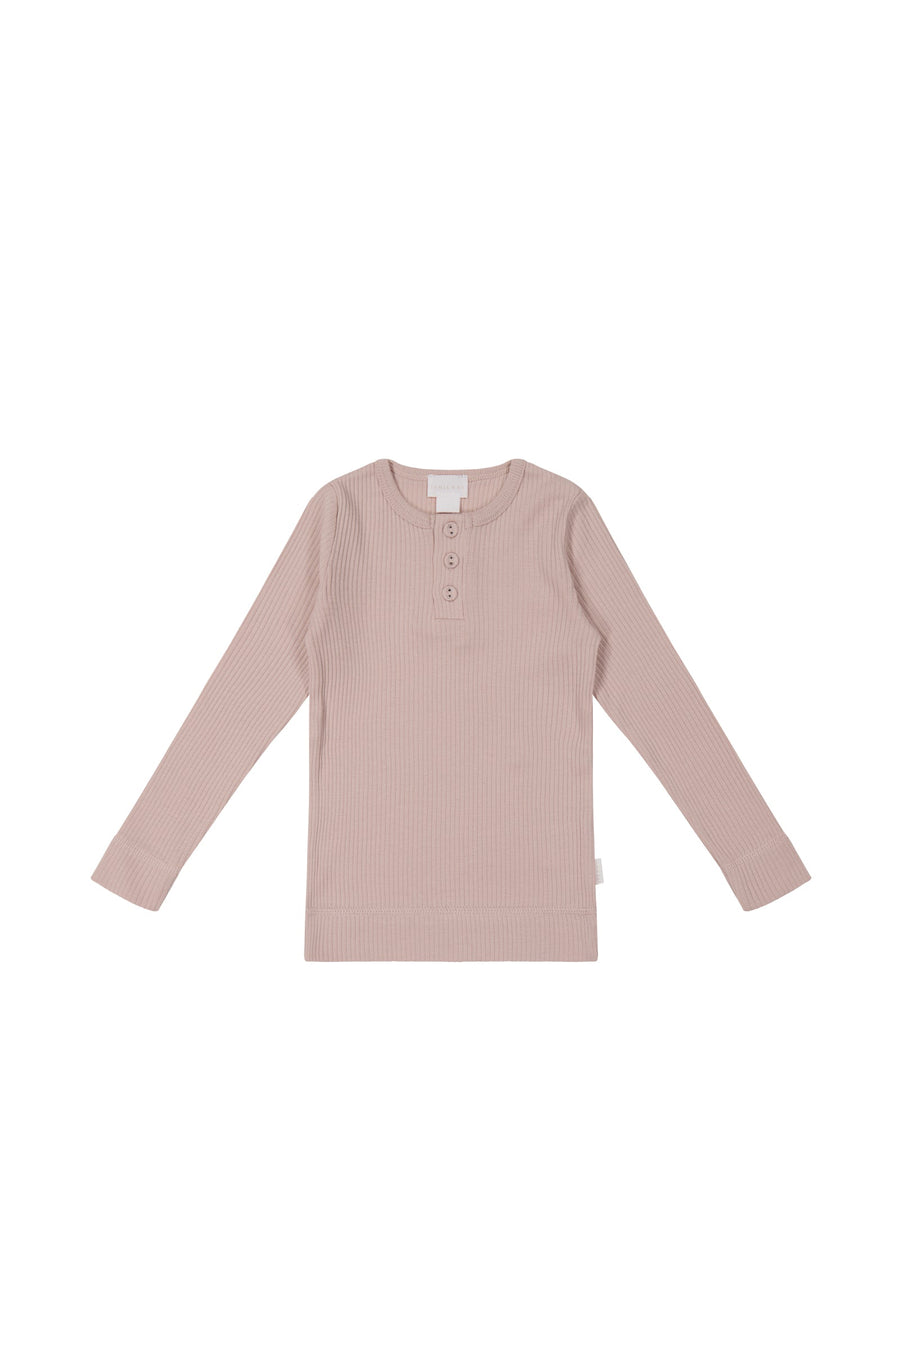 Organic Cotton Modal Long Sleeve Henley - Provence Dusty Pink